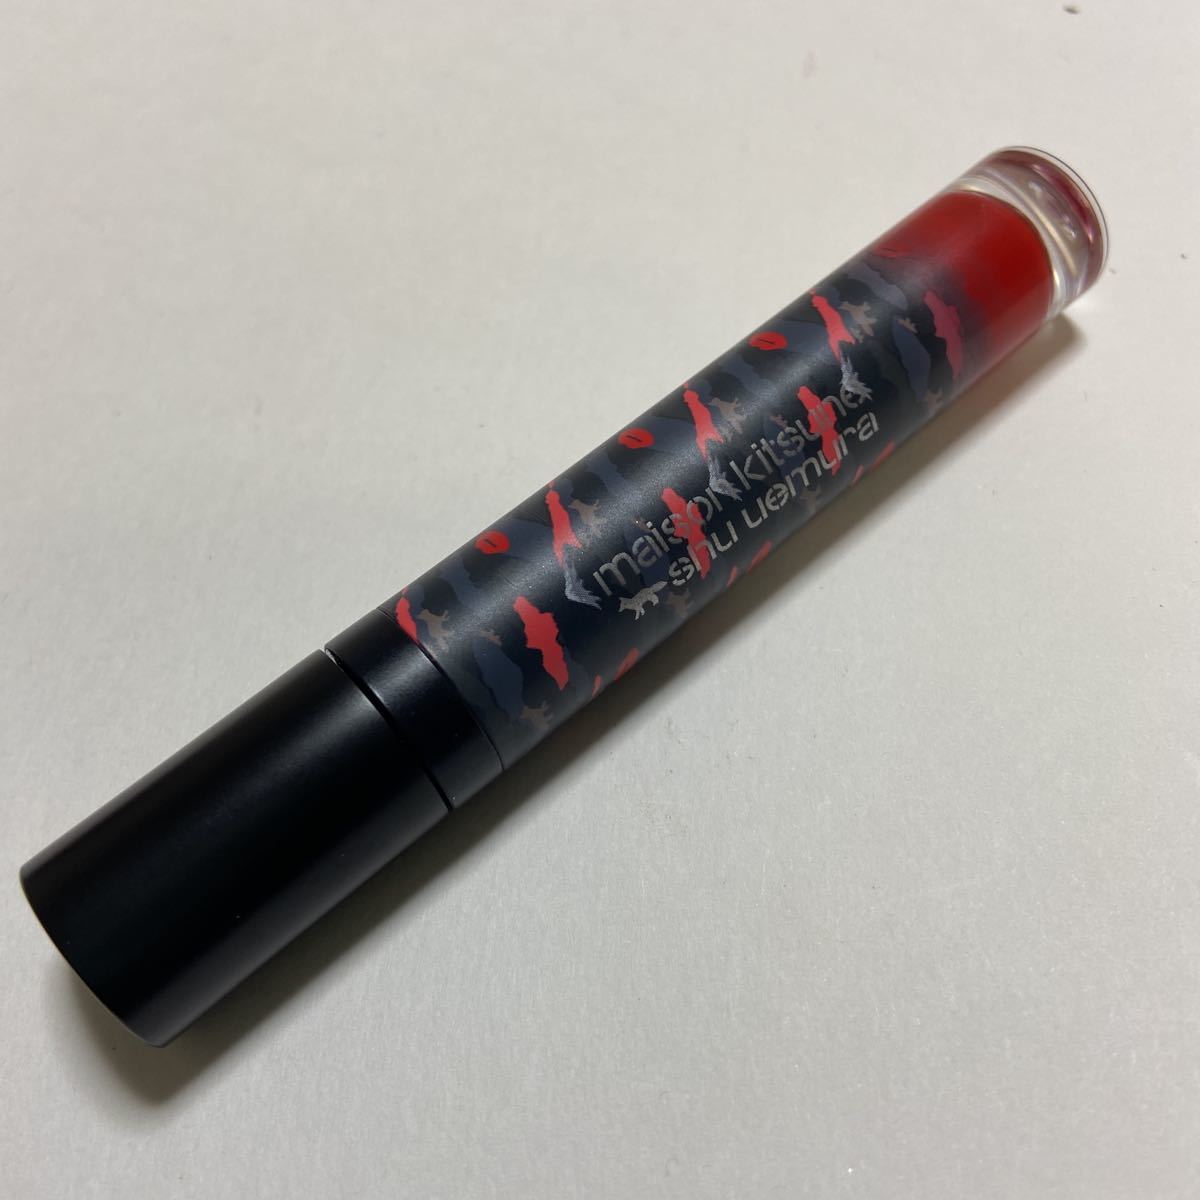  Shu Uemura mat shup rear M RD 04 liquid lip lipstick 